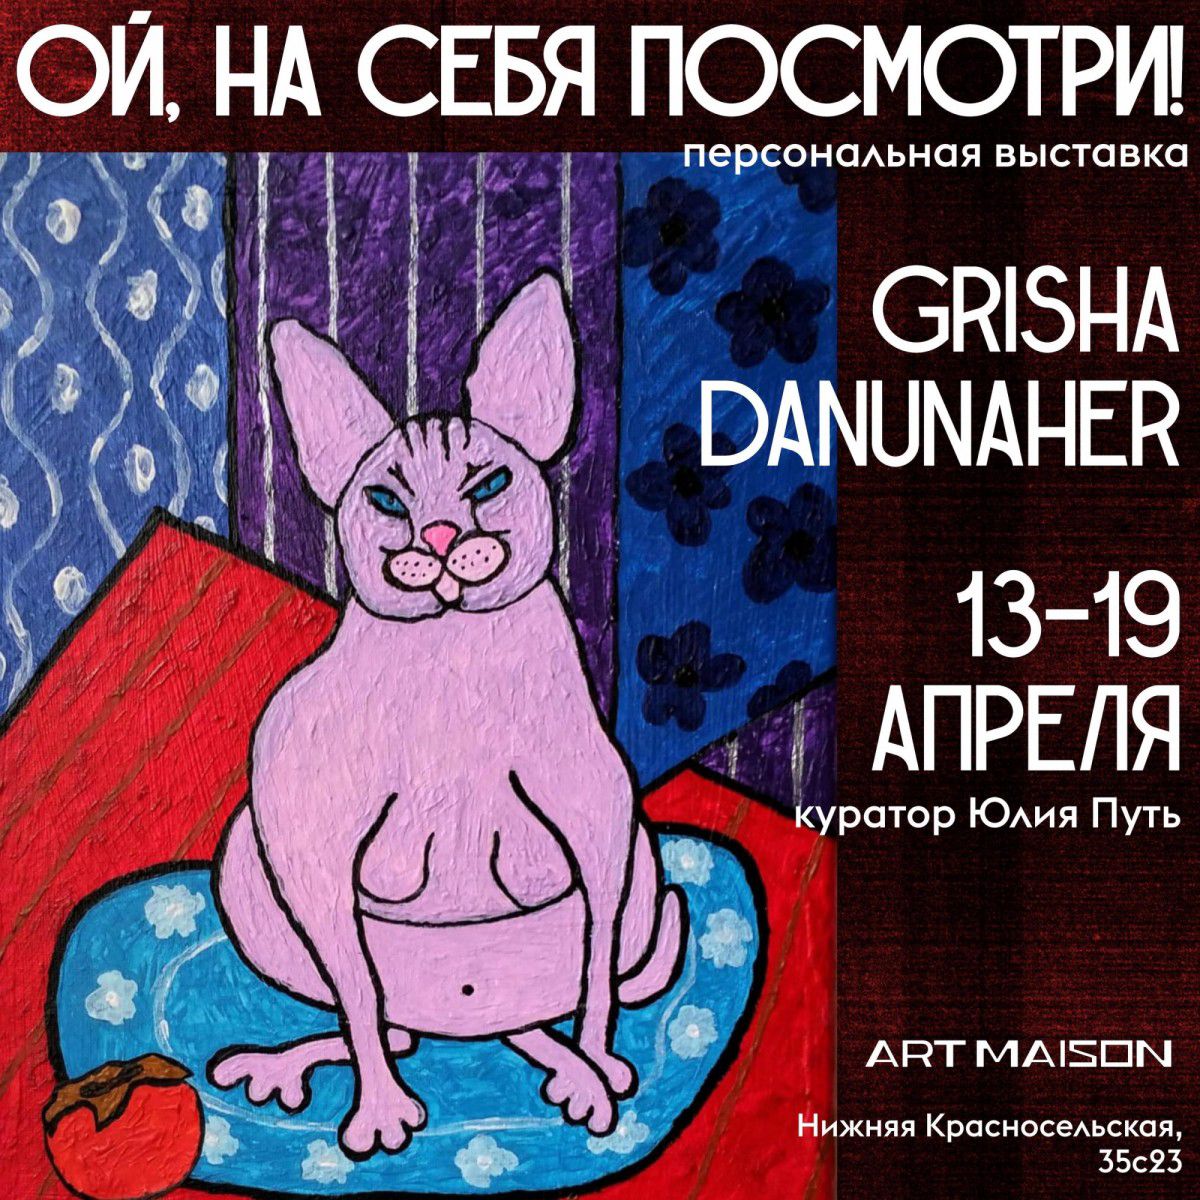 Выставка Grisha Danunaher 